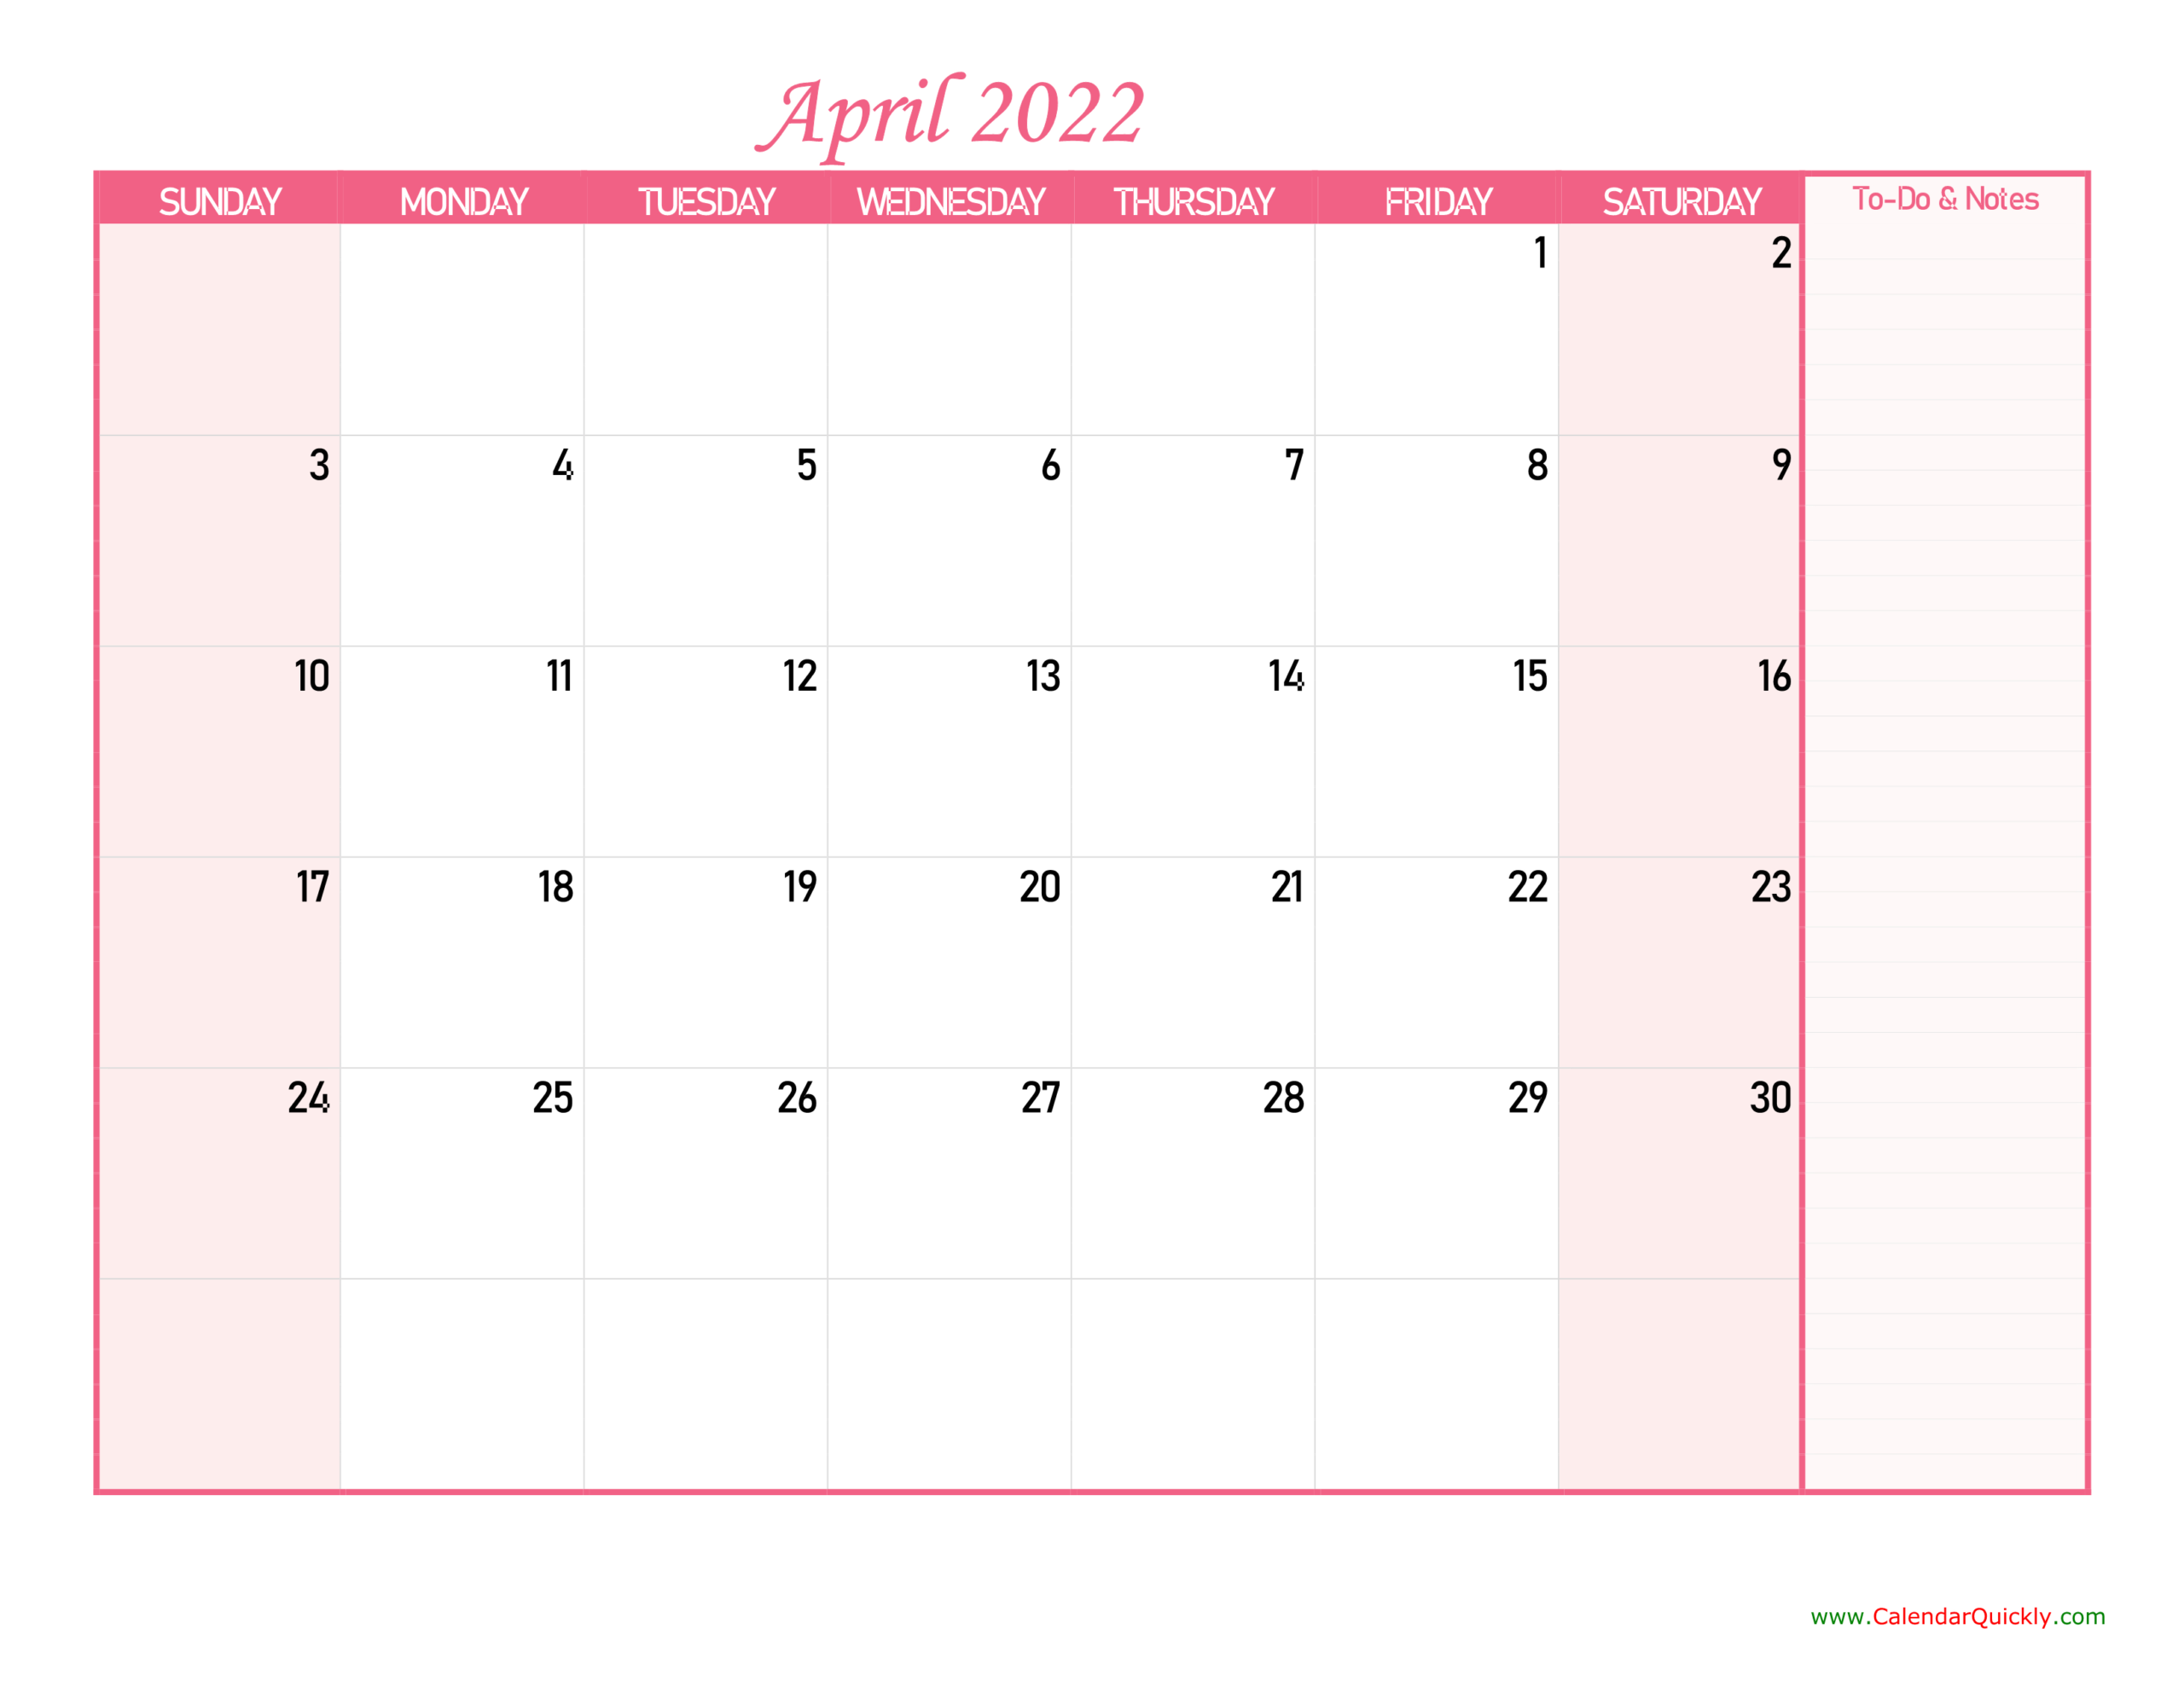 April Calendar 2022 With Notes | Calendar Quickly  Blank Calendar April 2022 To March 2022